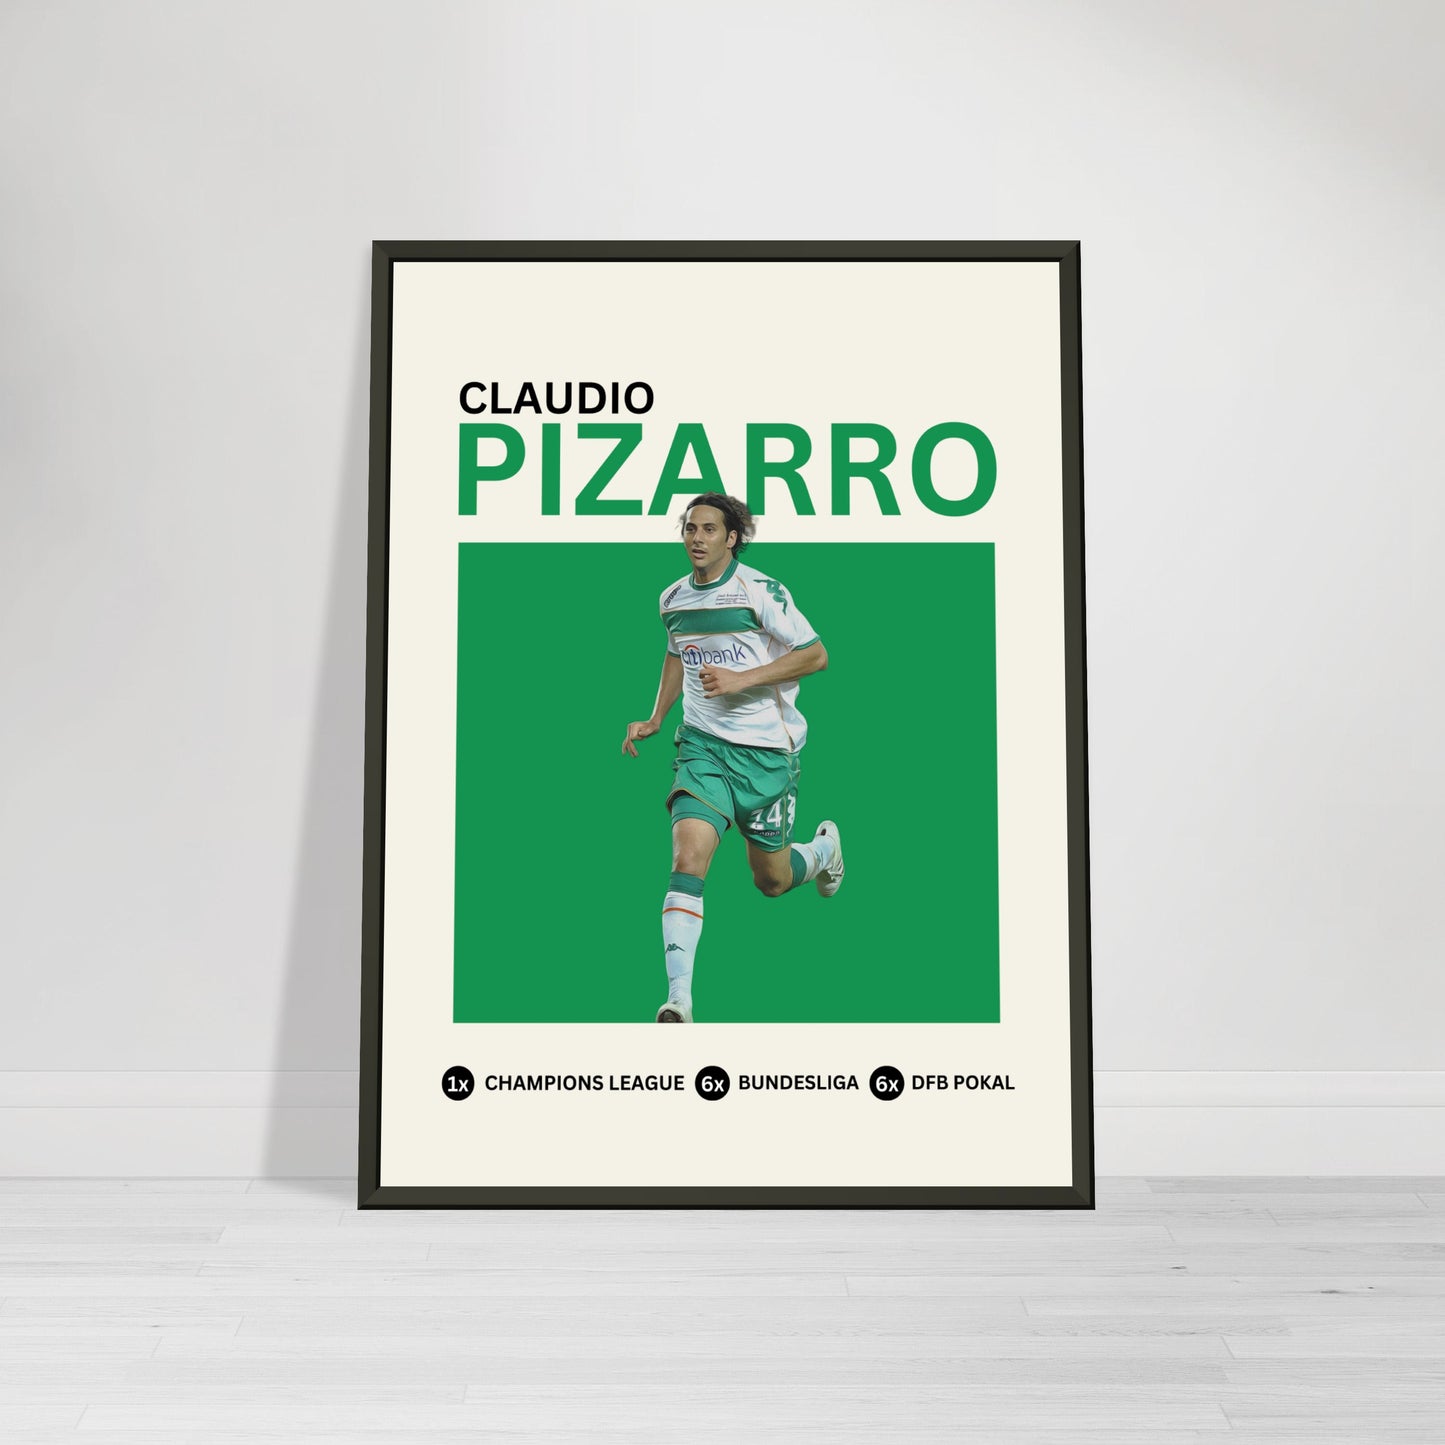 Claudio Pizarro Career